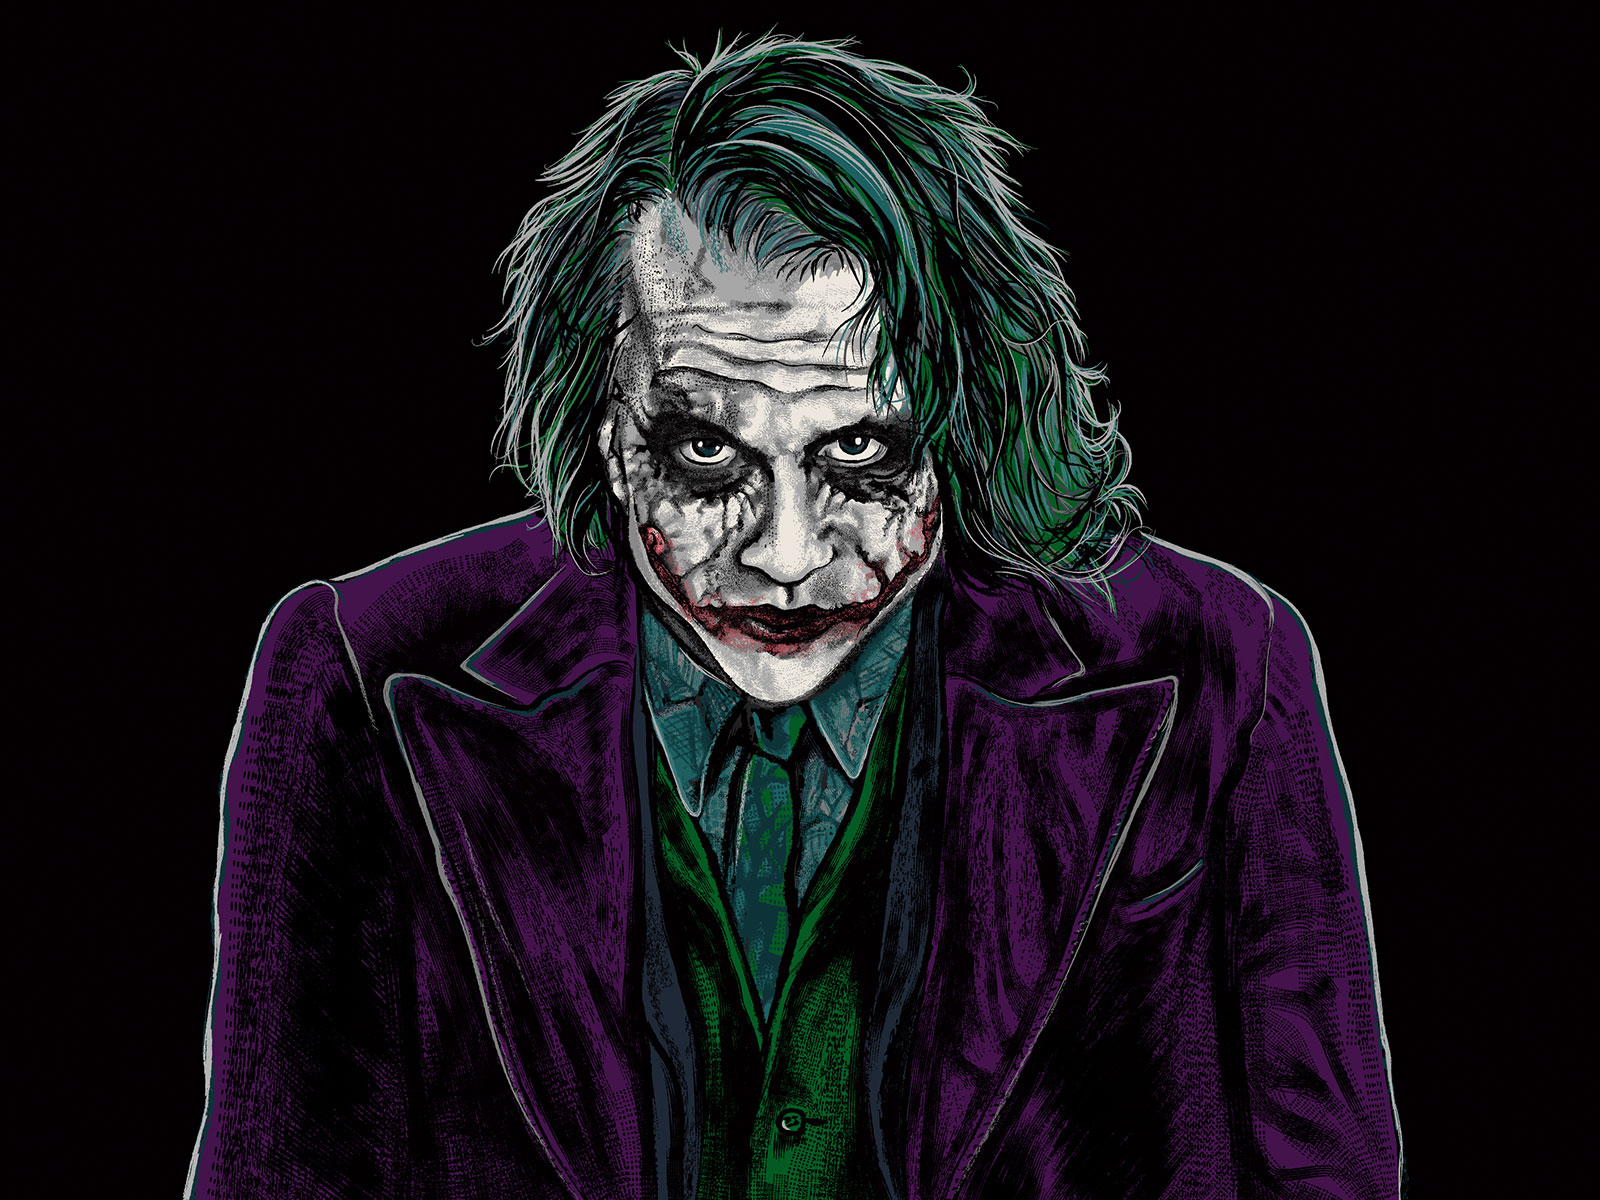 639 Joker Dark Knight Images, Stock Photos & Vectors | Shutterstock